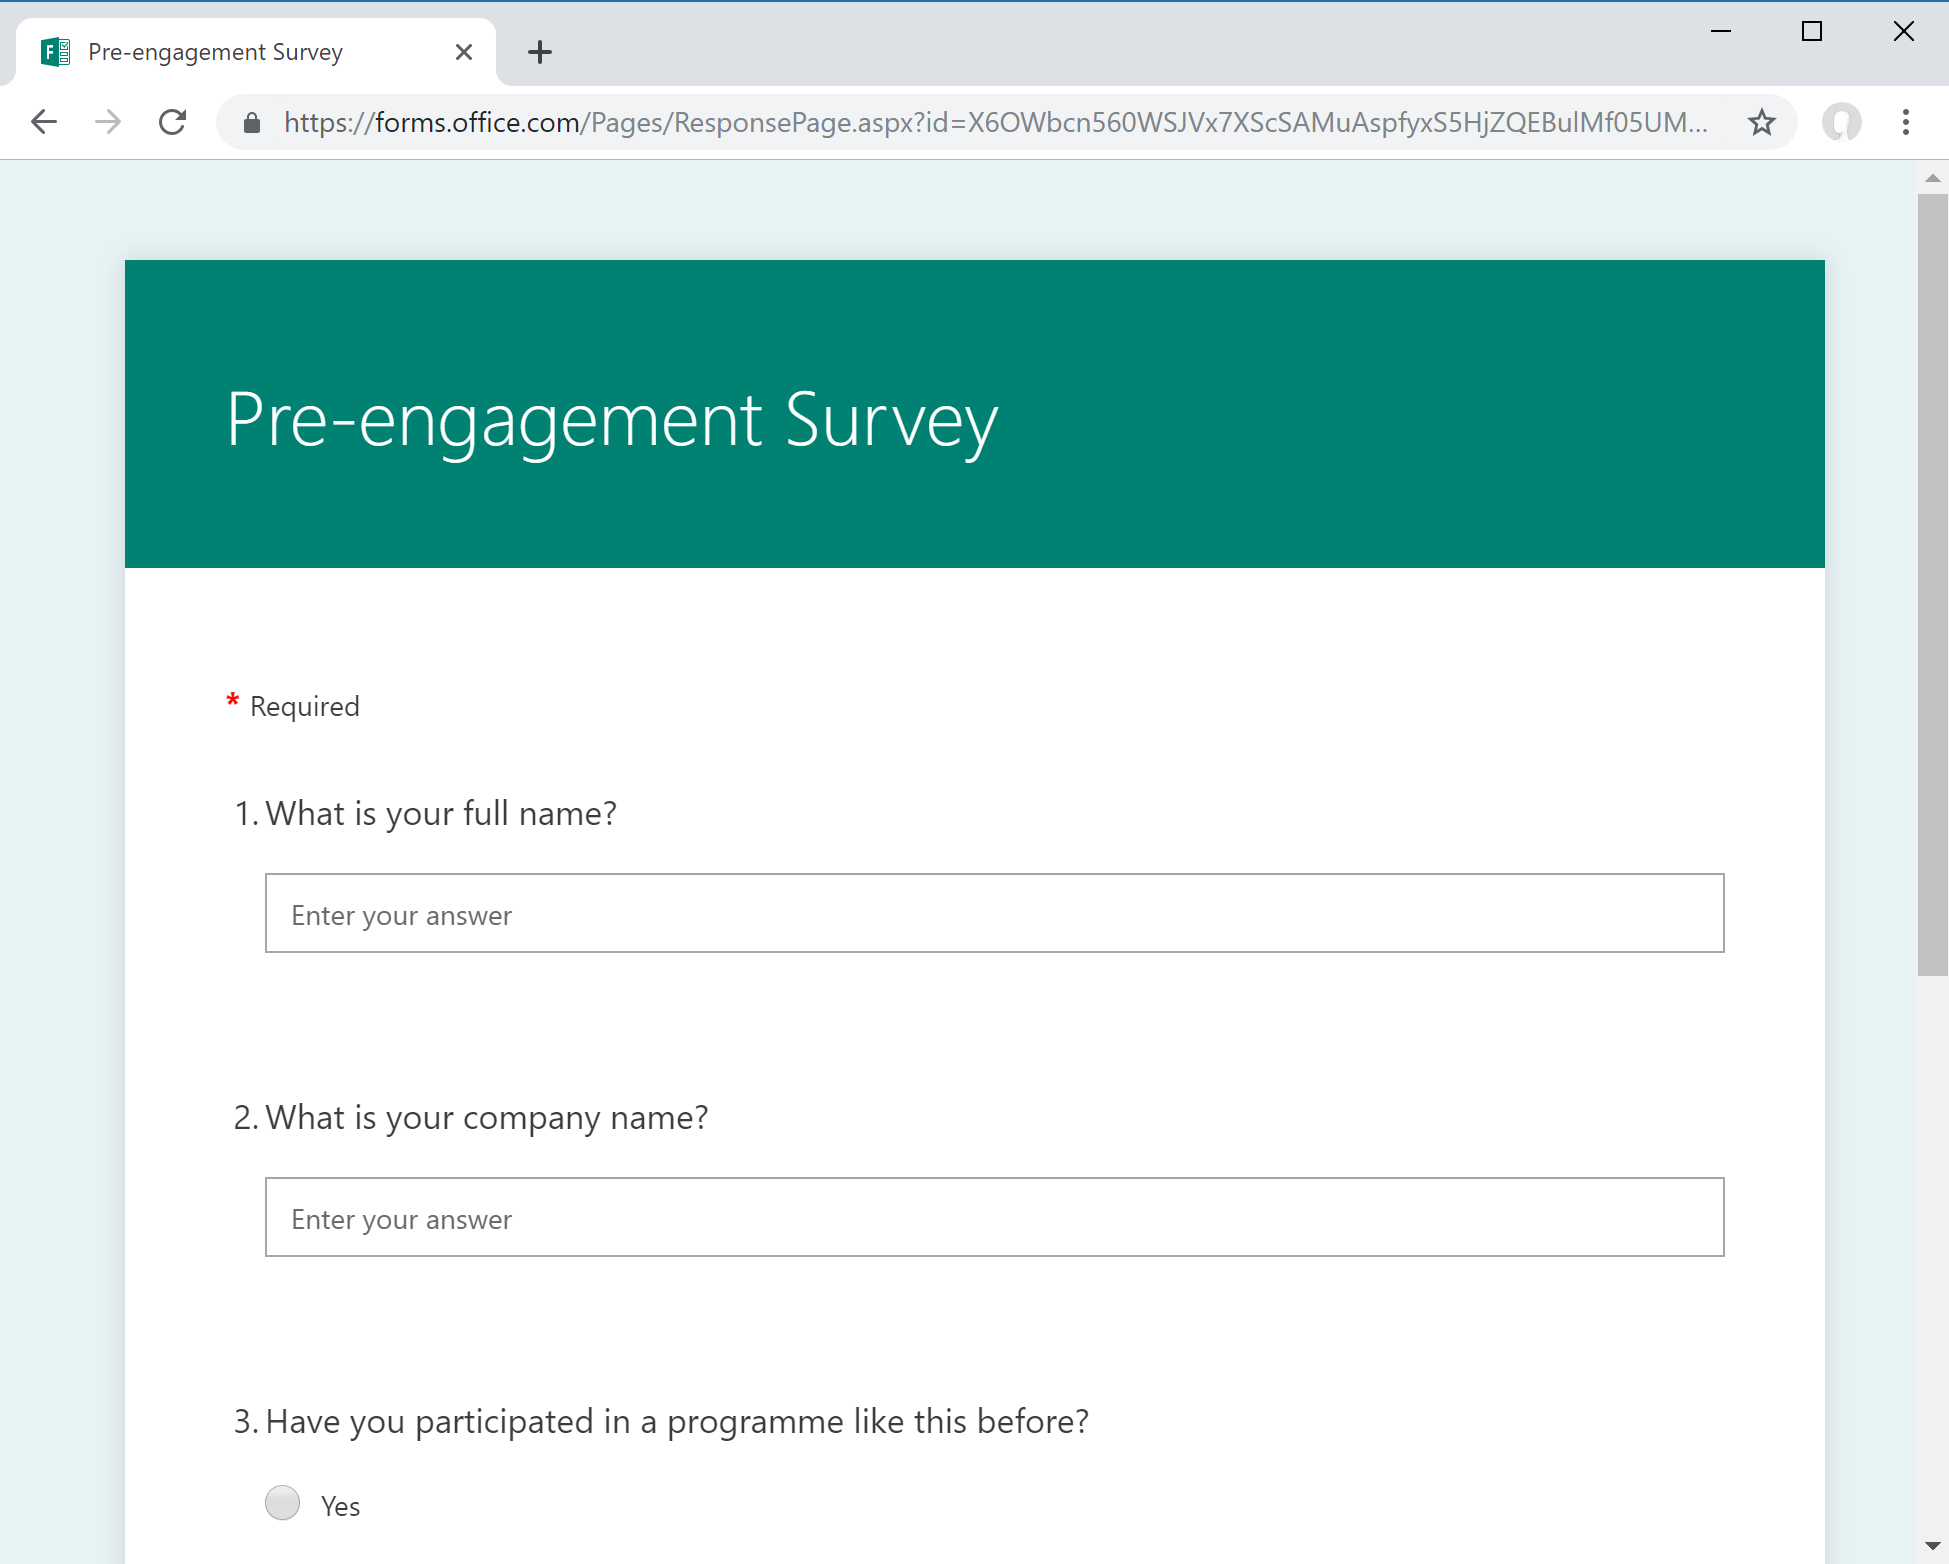 Pre-engagment survey